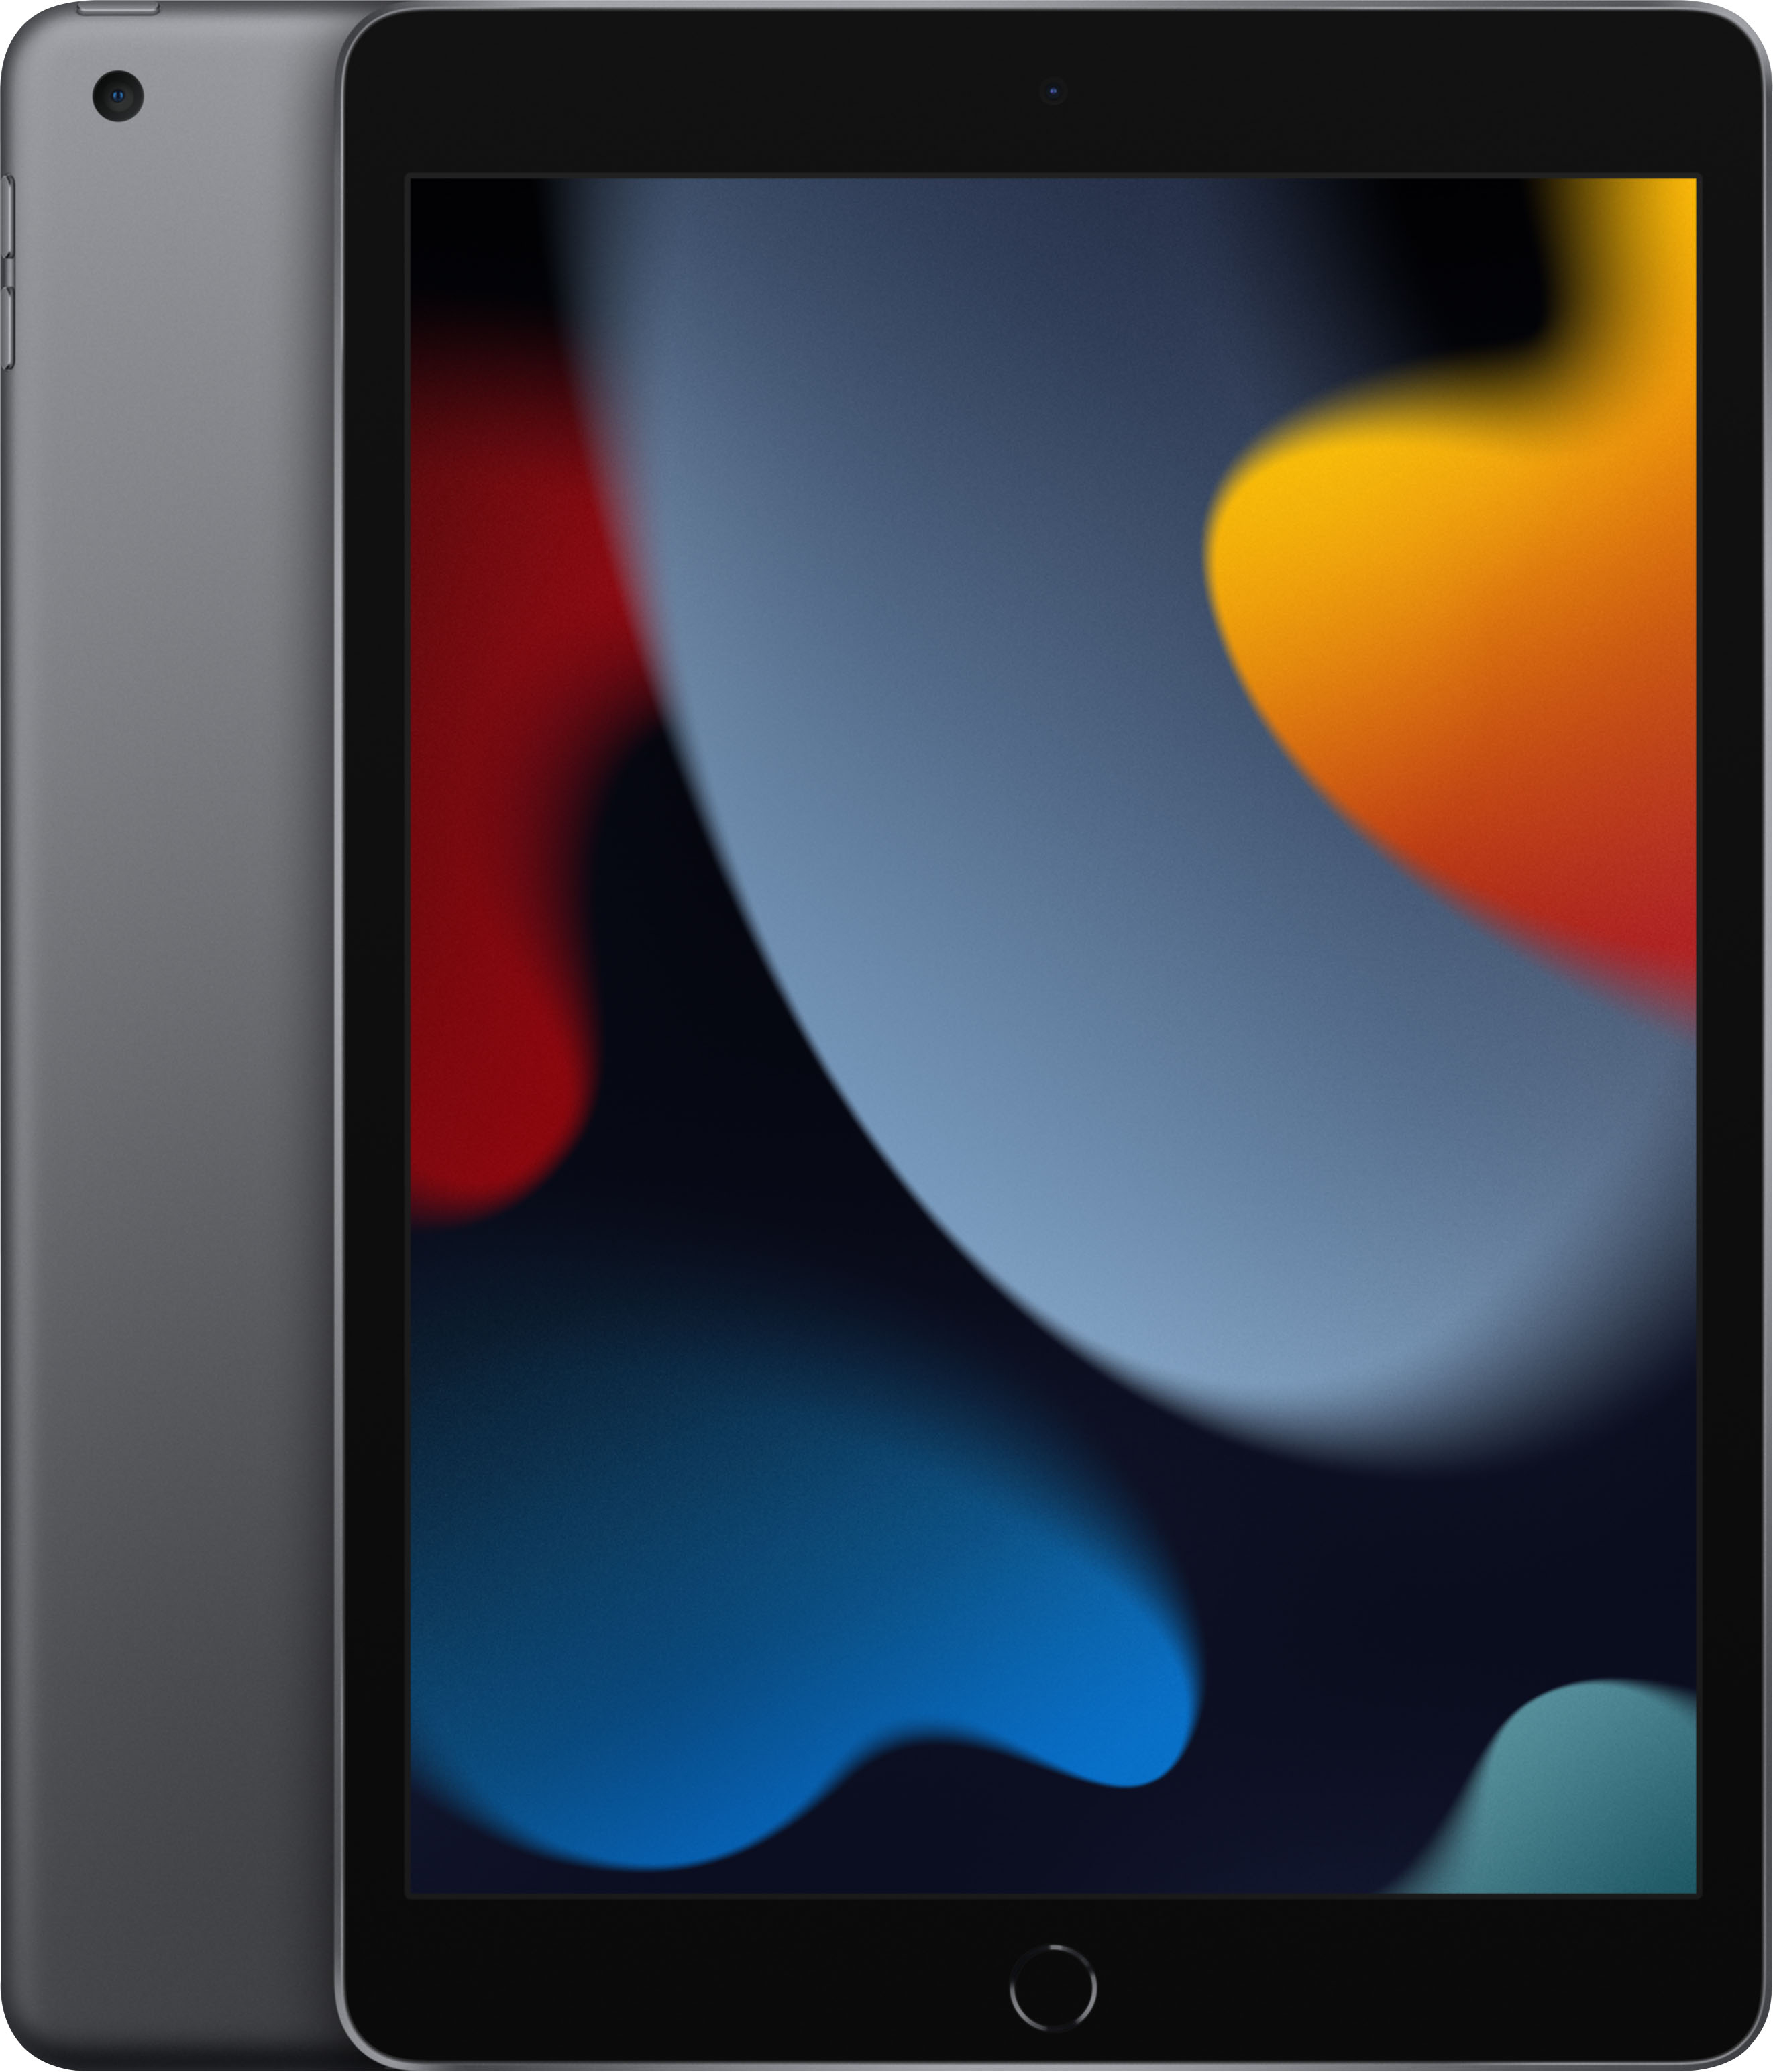 Apple 10.2-Inch iPad (9th Generation) with Wi-Fi 64GB Space Gray MK2K3LL/A - Best Buy $249.99